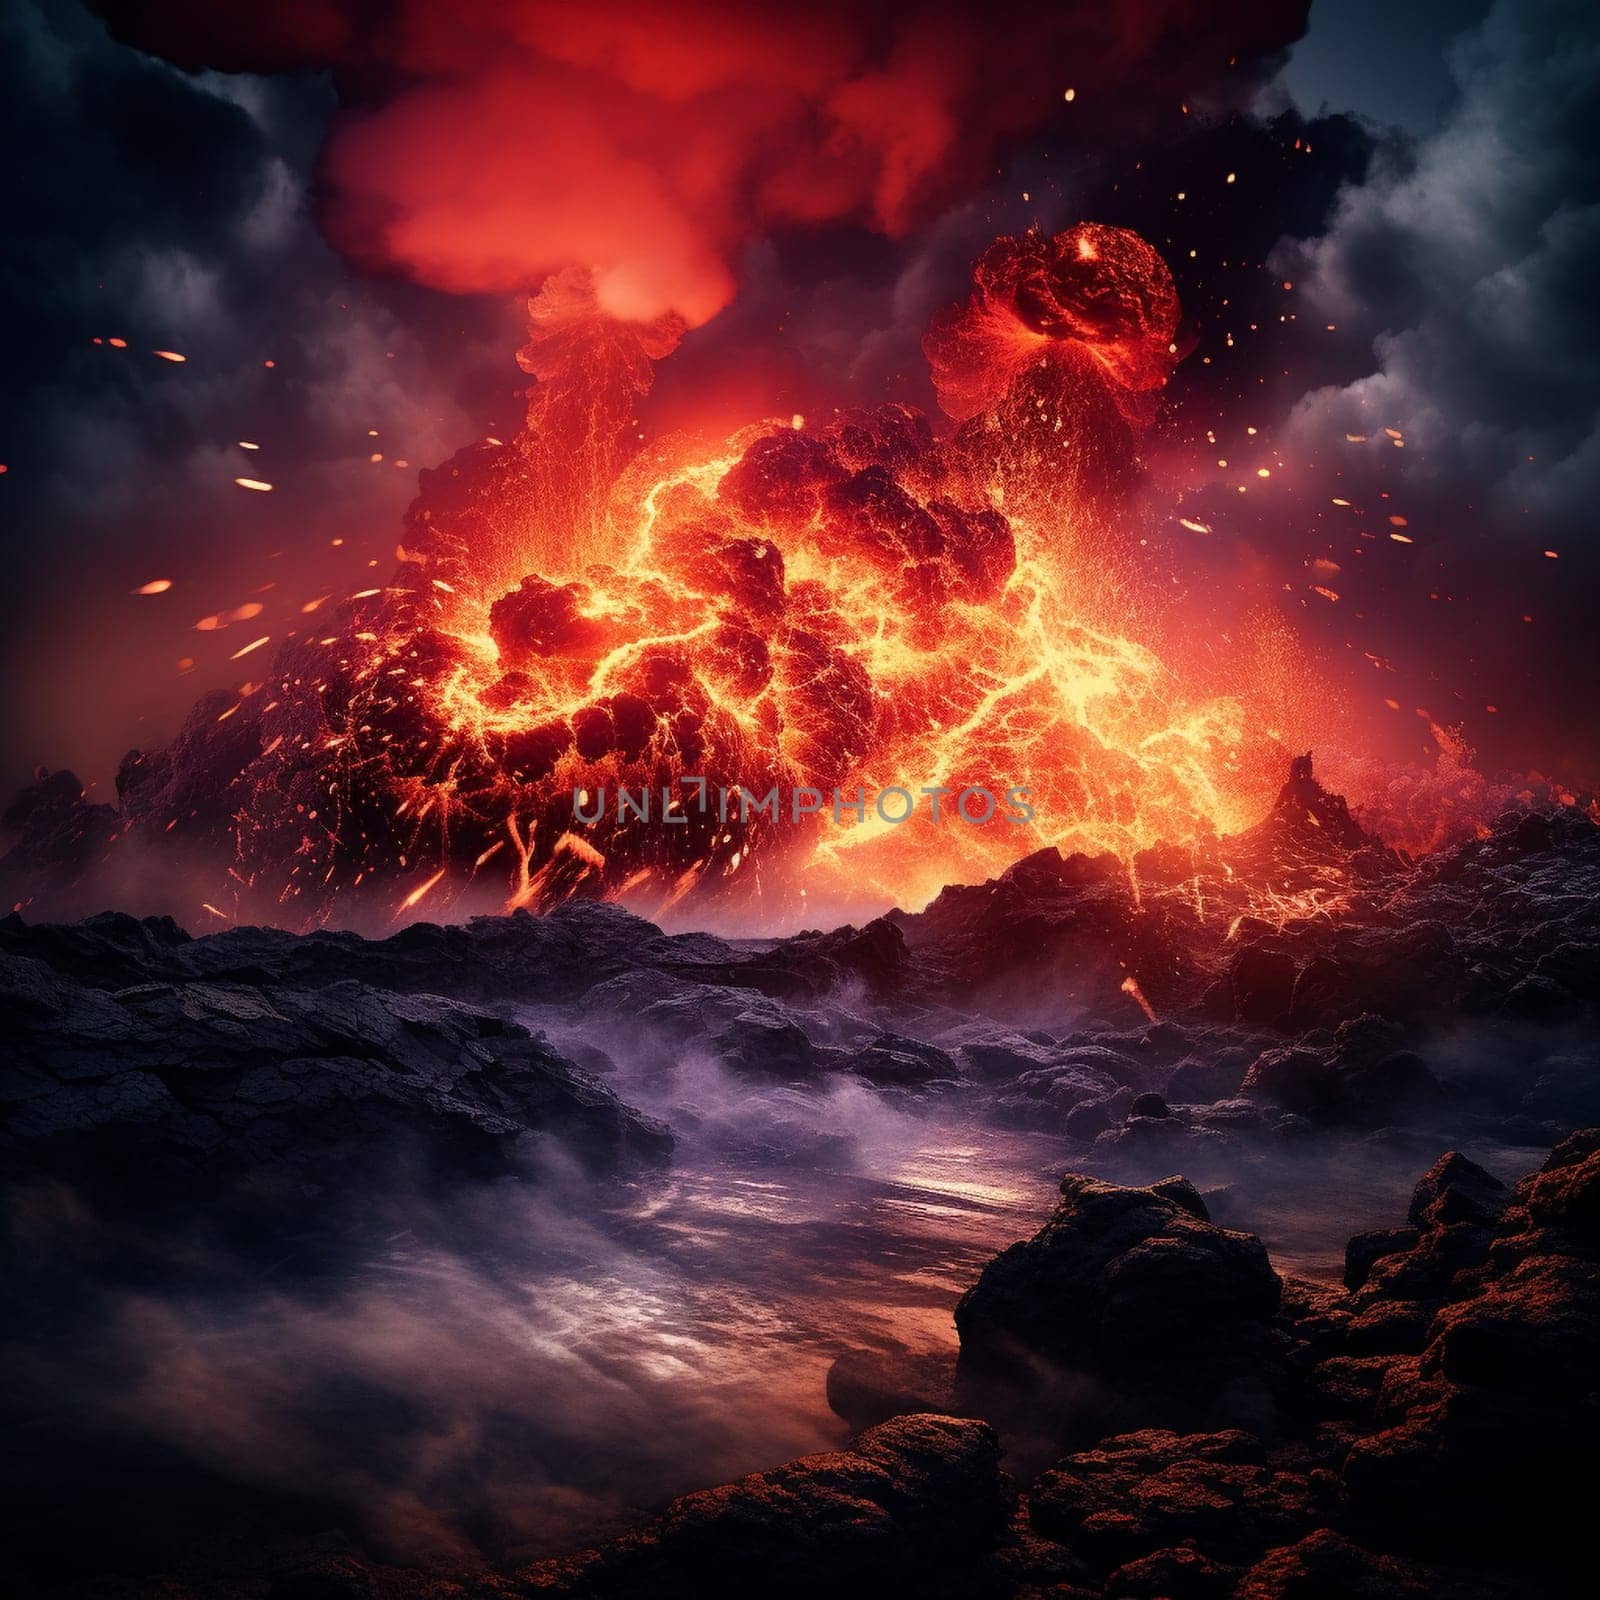 Firestorm Burst: Vivid and Dynamic Image of an Intense Volcanic Eruption by Sahin